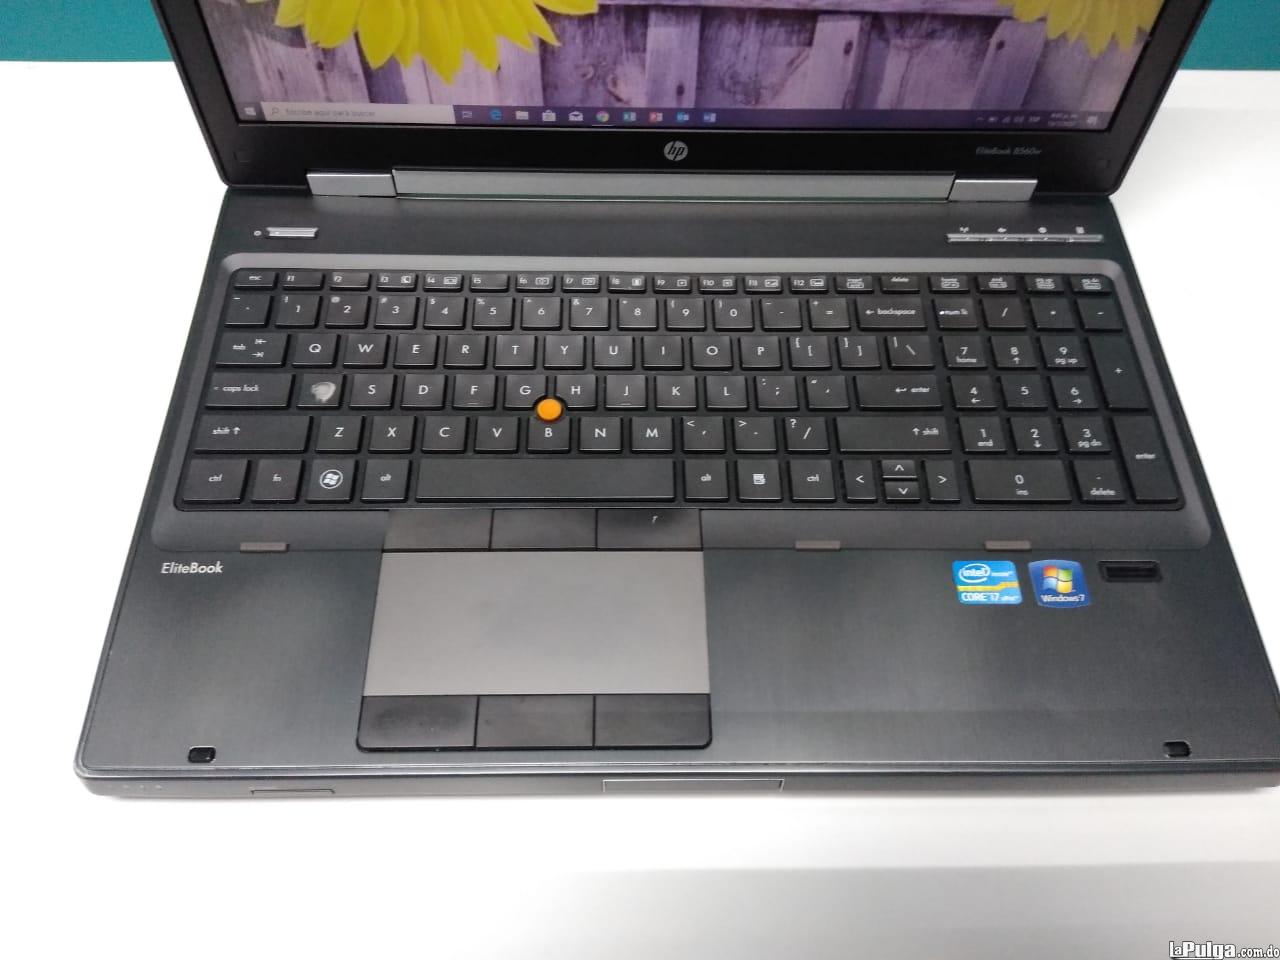 Laptop HP EliteBook 856OW / 2th Gen Intel Core i7 / 8GB DDR3 / 320GB Foto 7159373-2.jpg